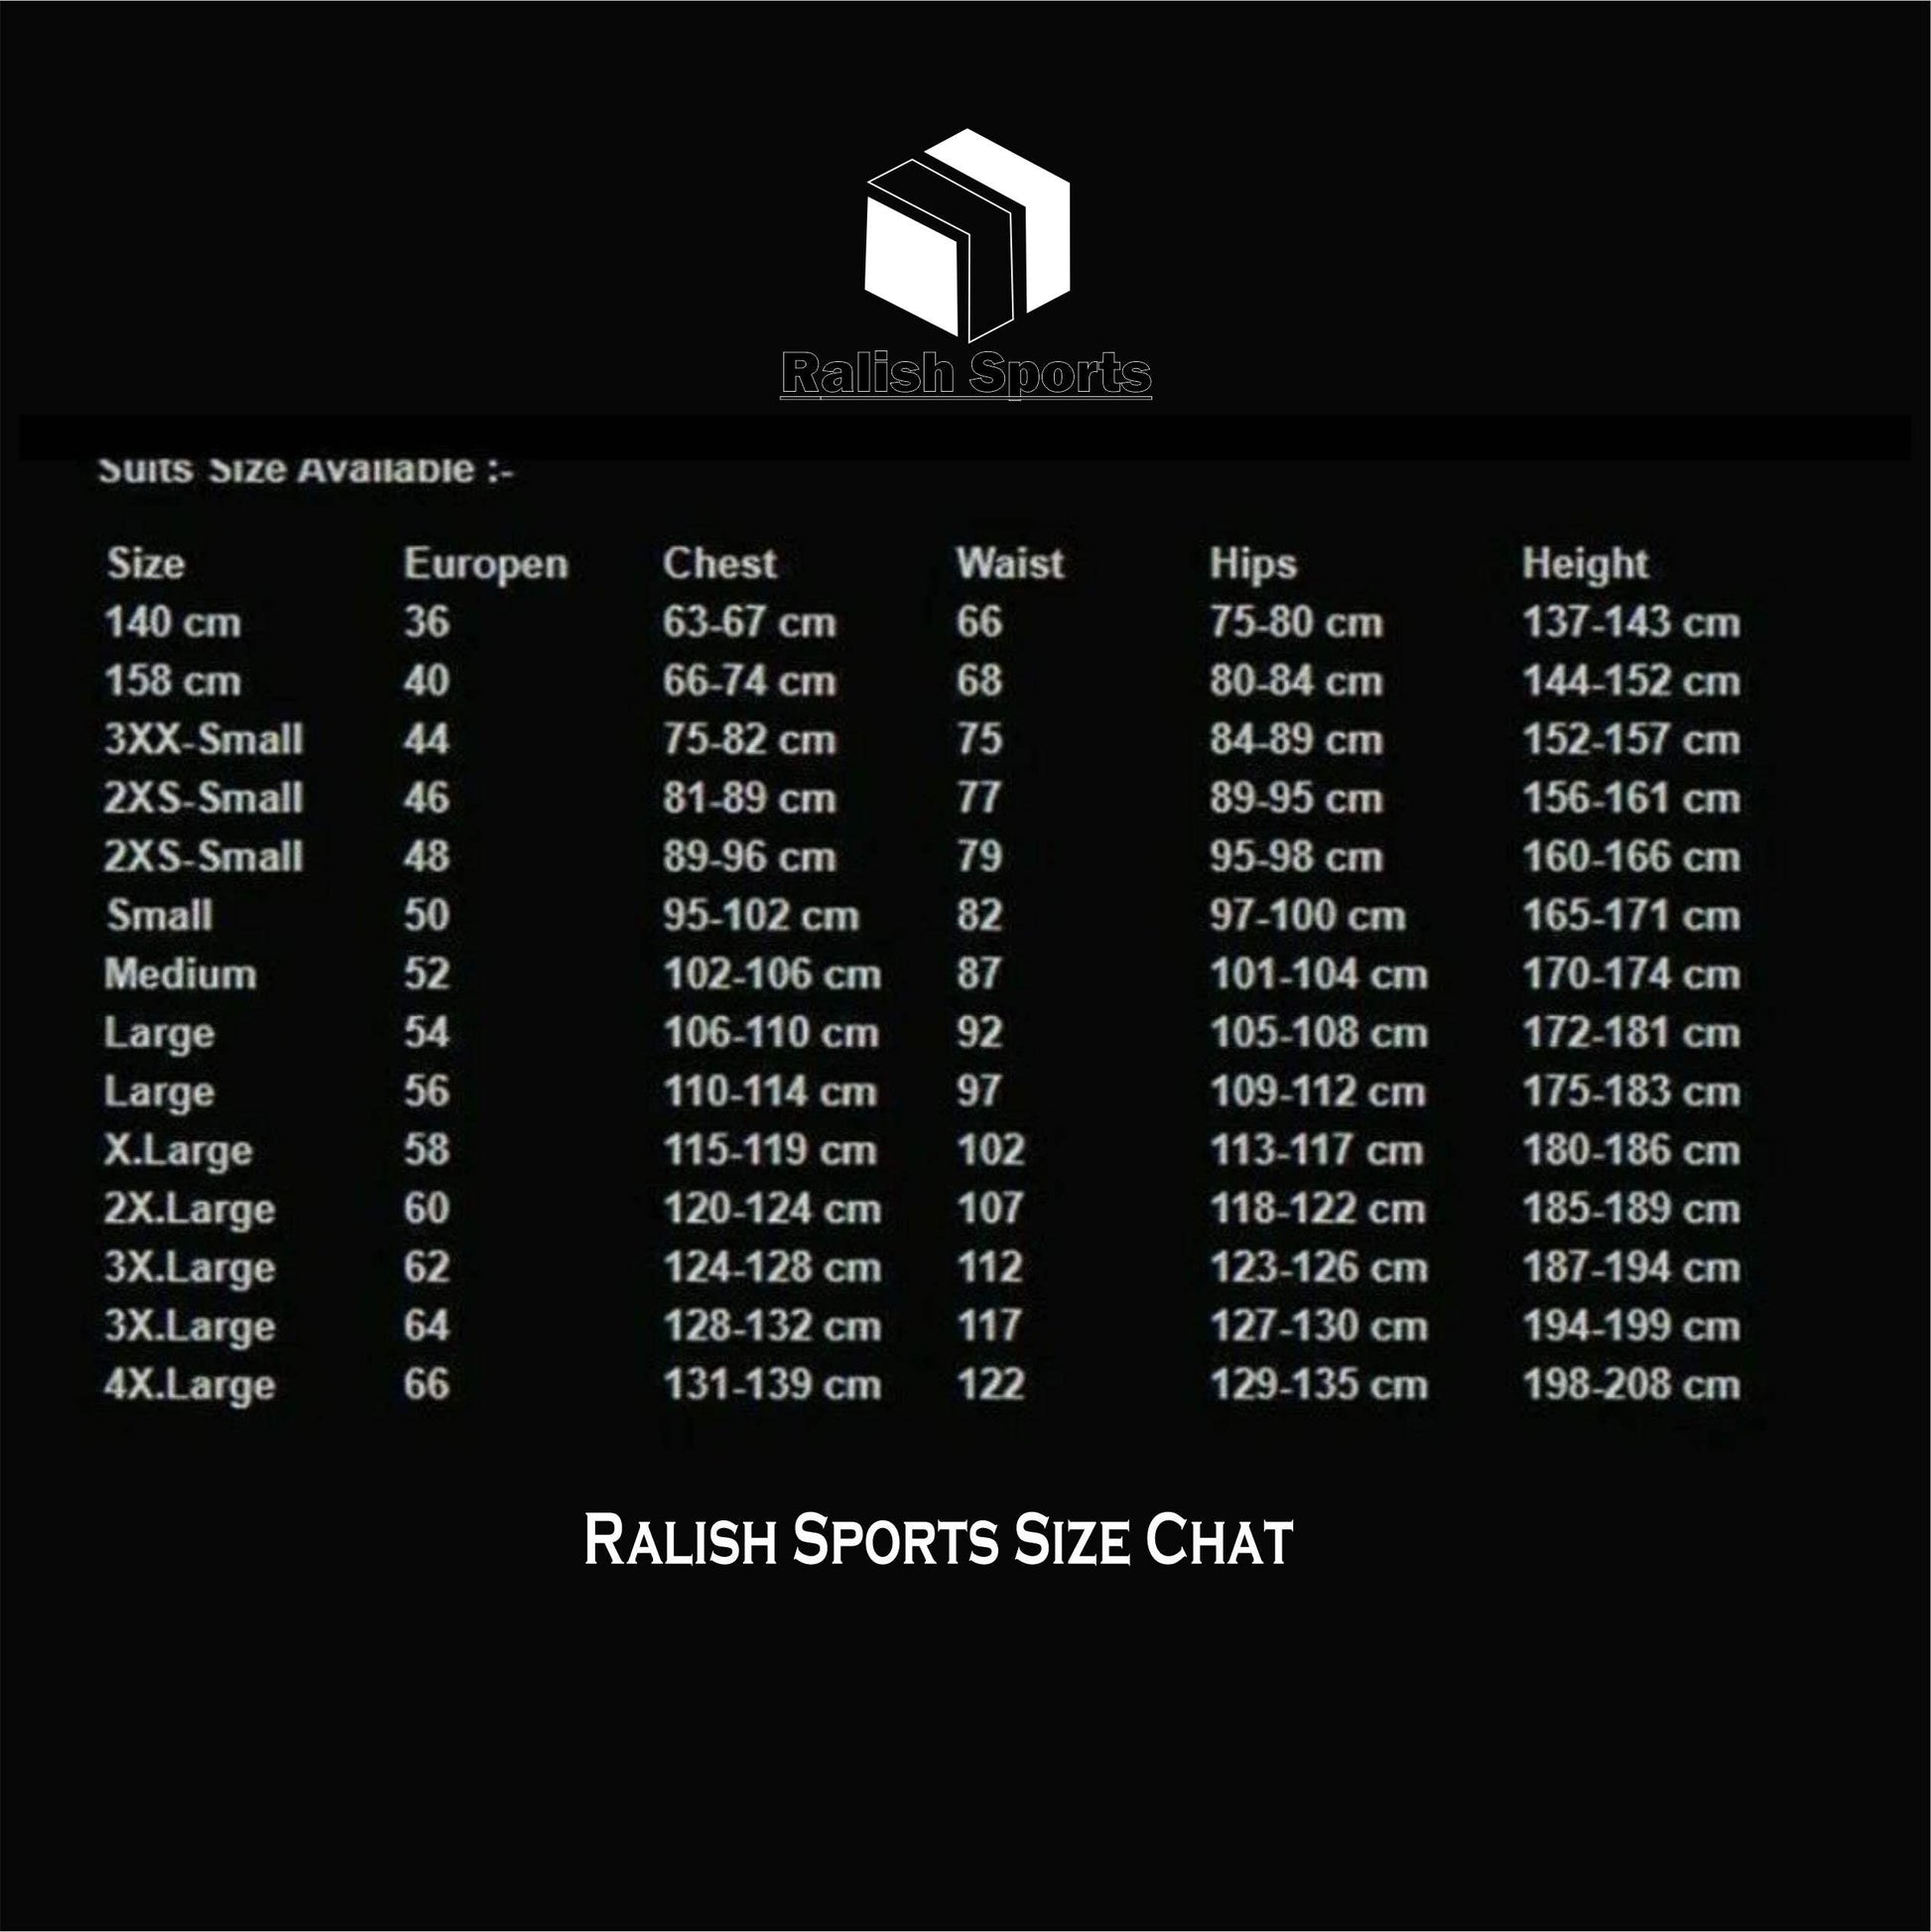 Kevin Magnussen F1 Race Suit 2015 - Ralish Sports